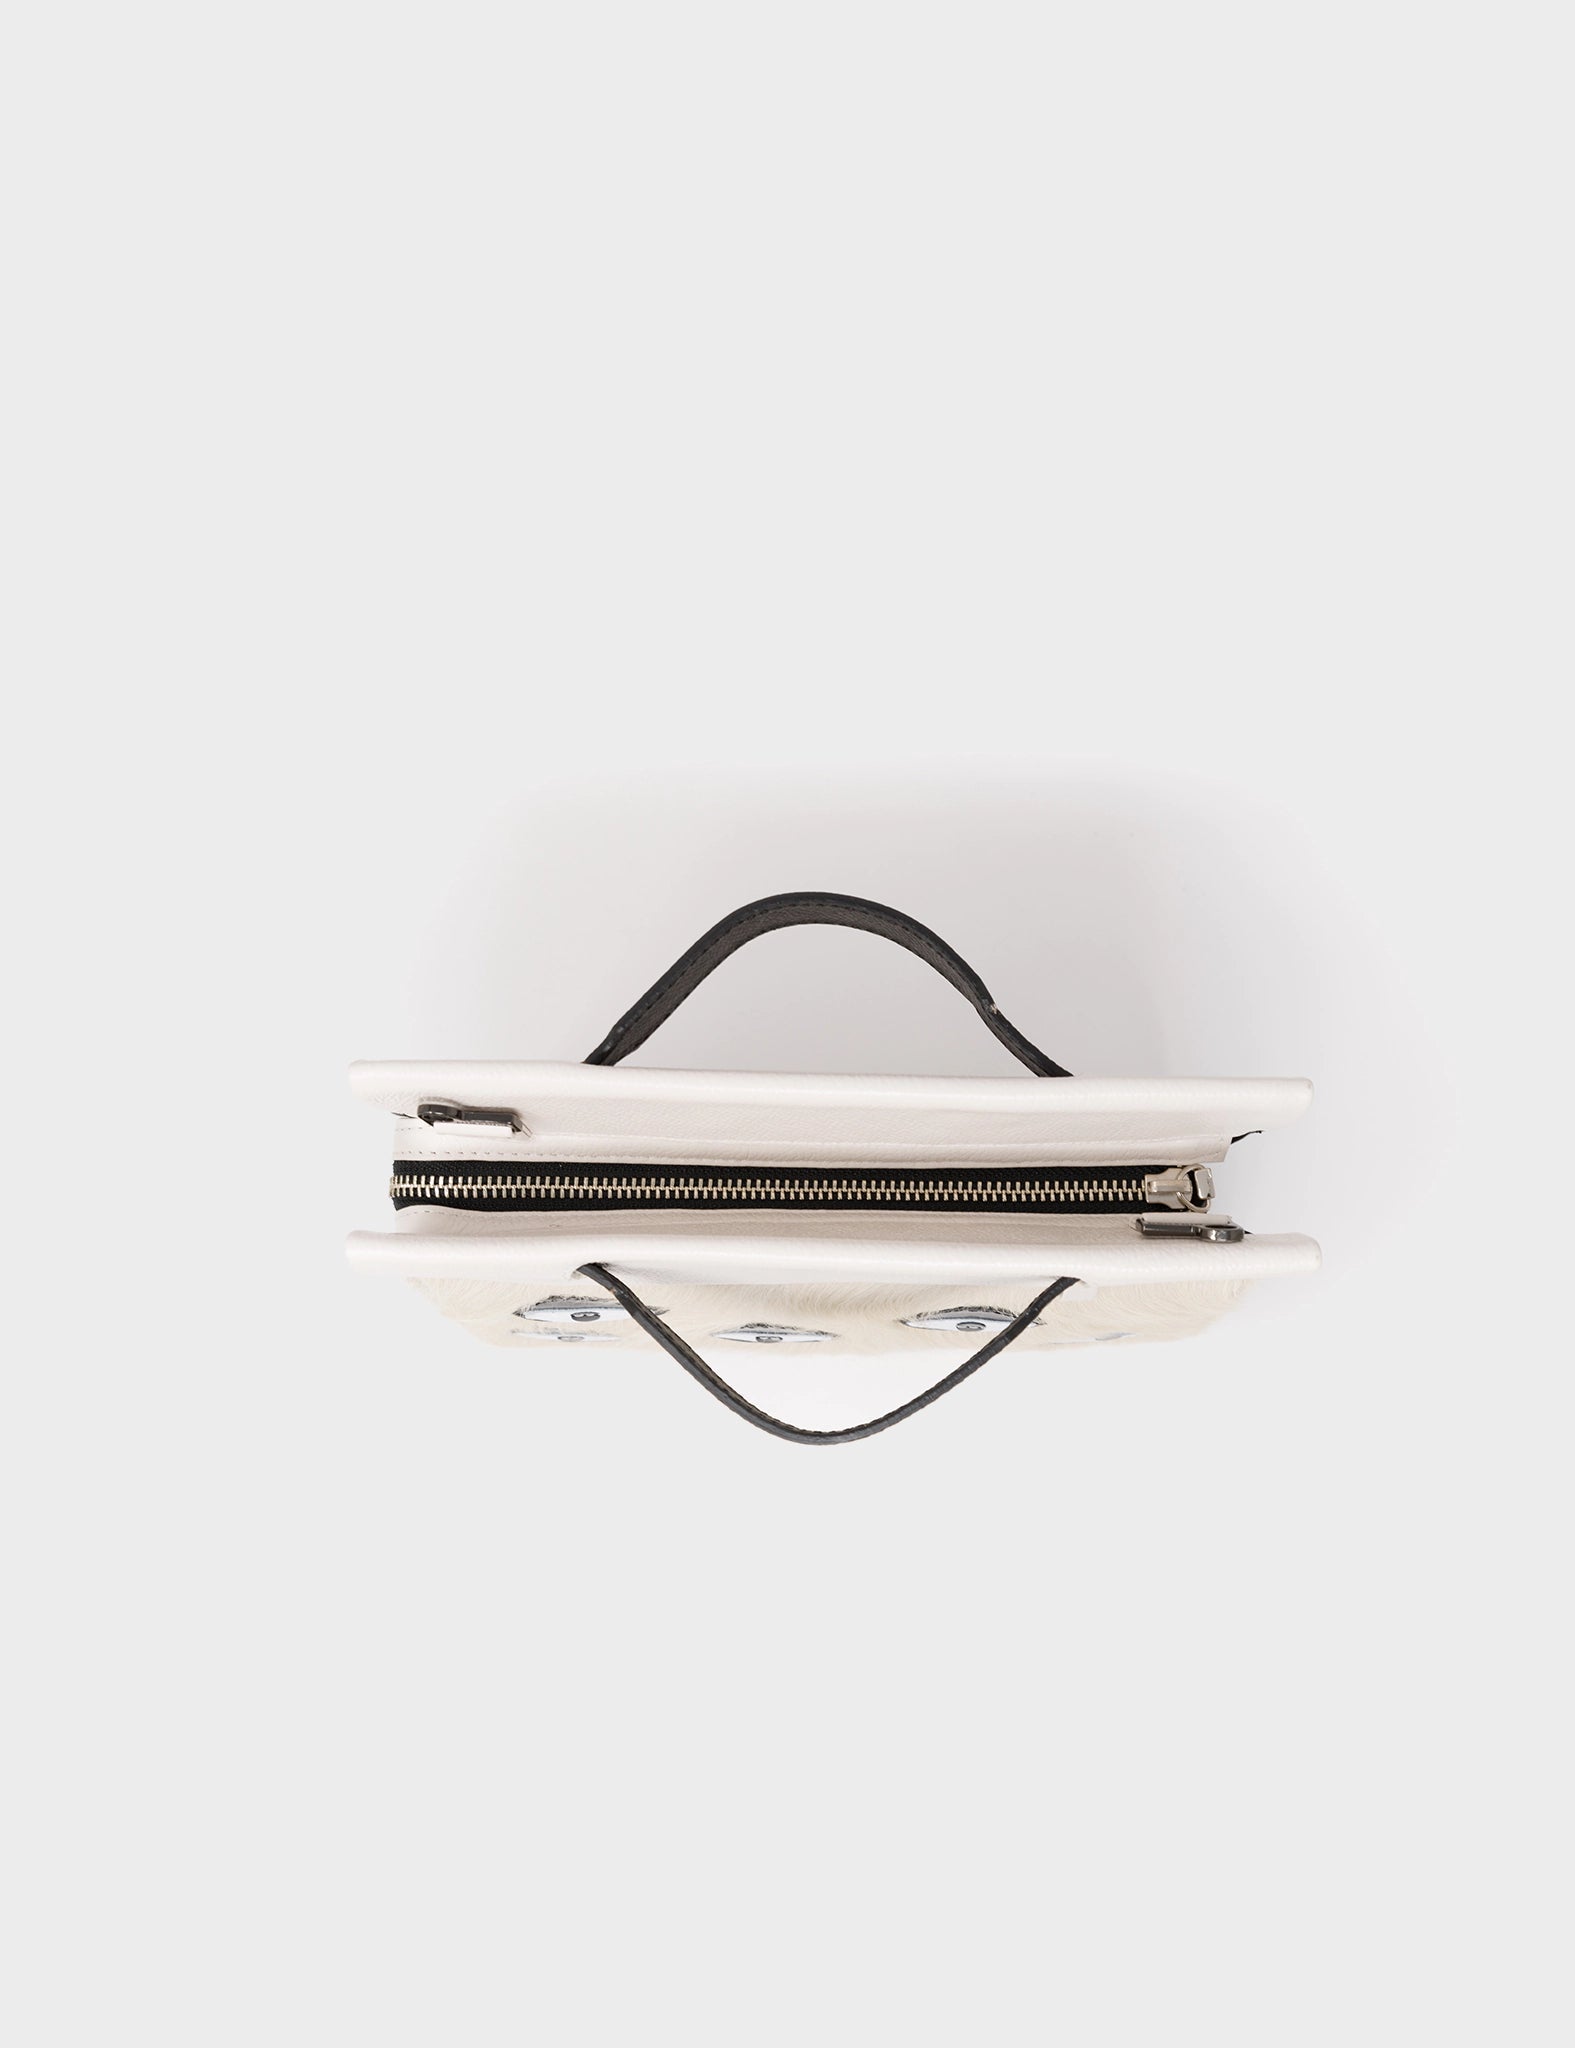 Vali Crossbody Small Cream Leather Bag - Eyes Applique Adjustable Handle - Top view